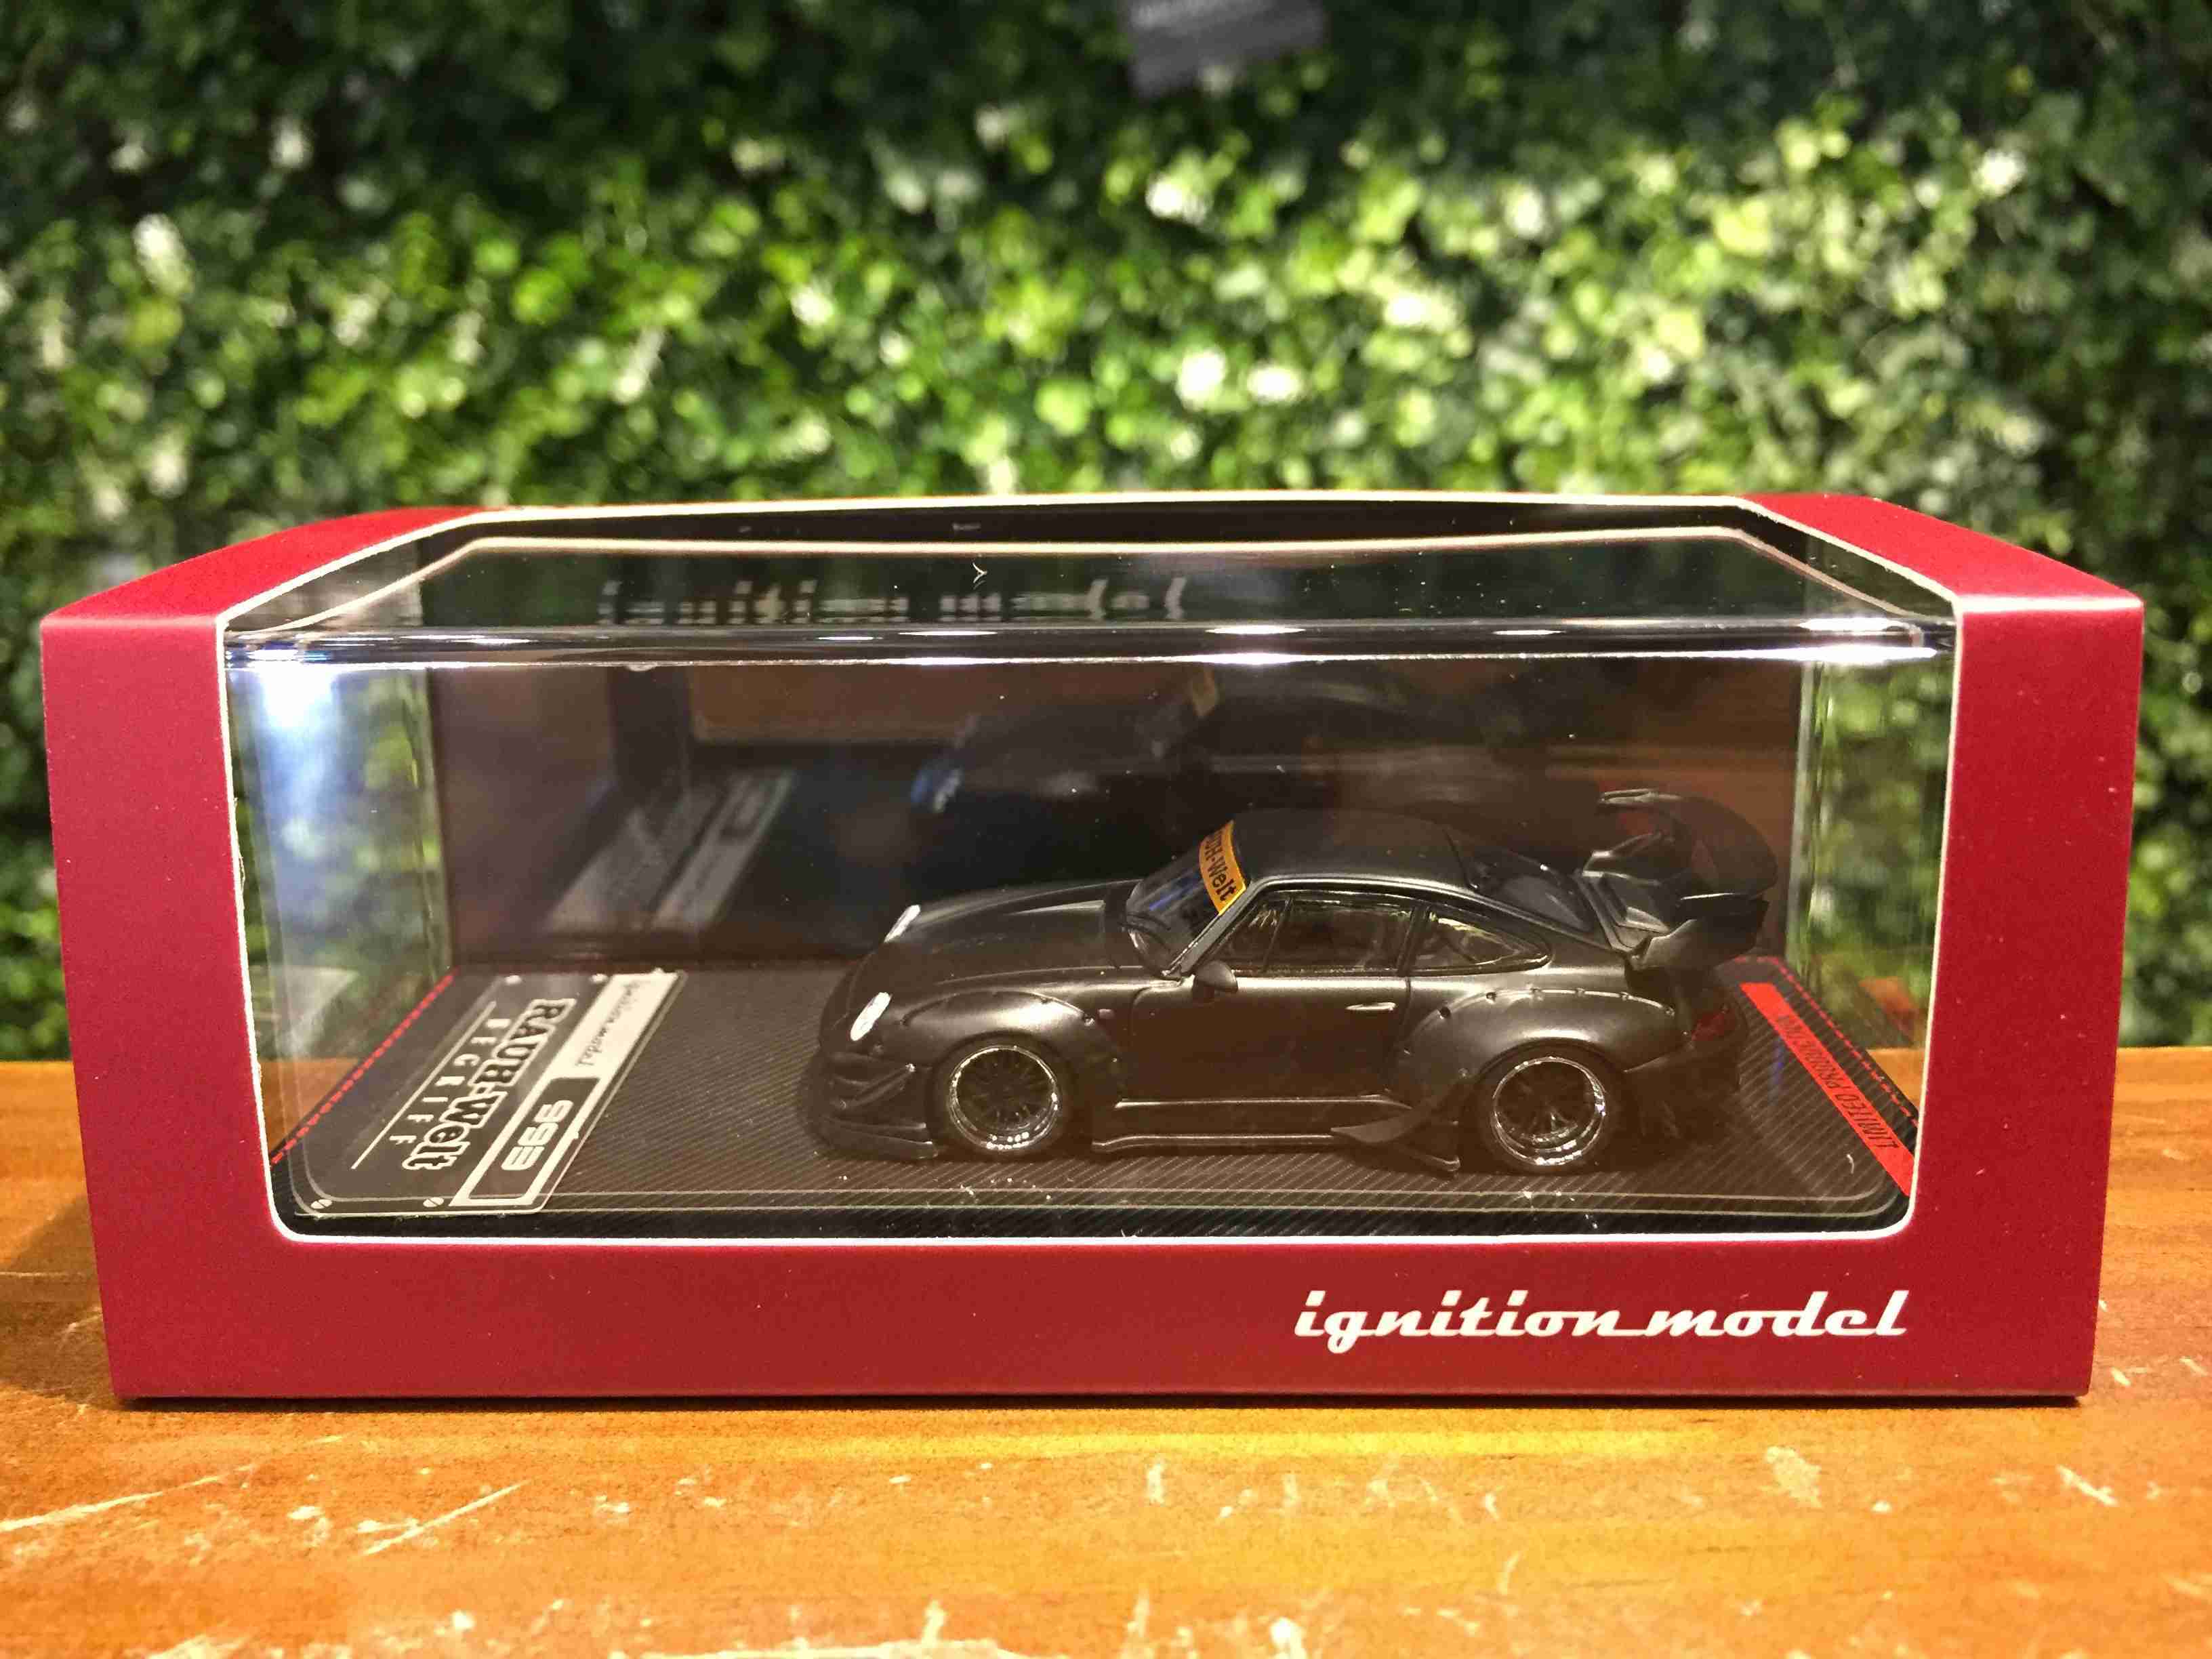 1/64 Ignition Model RWB Porsche 911 (993) Black IG2155【MGM】